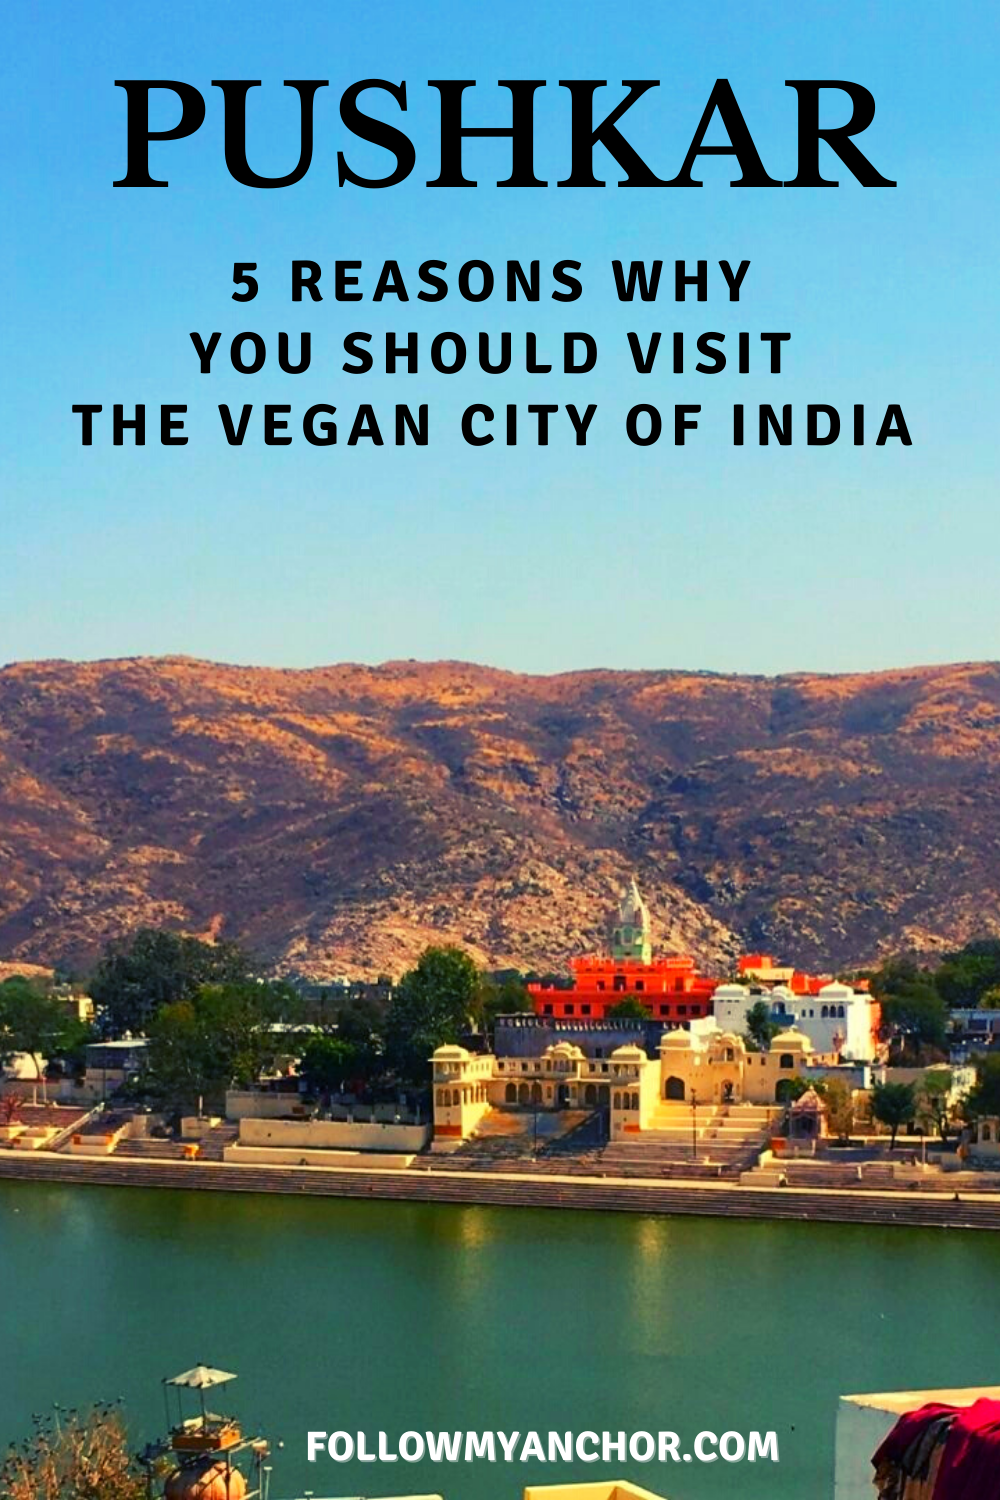 PUSHKAR: 5 REASONS WHY YOU SHOULD VISIT THE VEGAN CITY OF INDIA